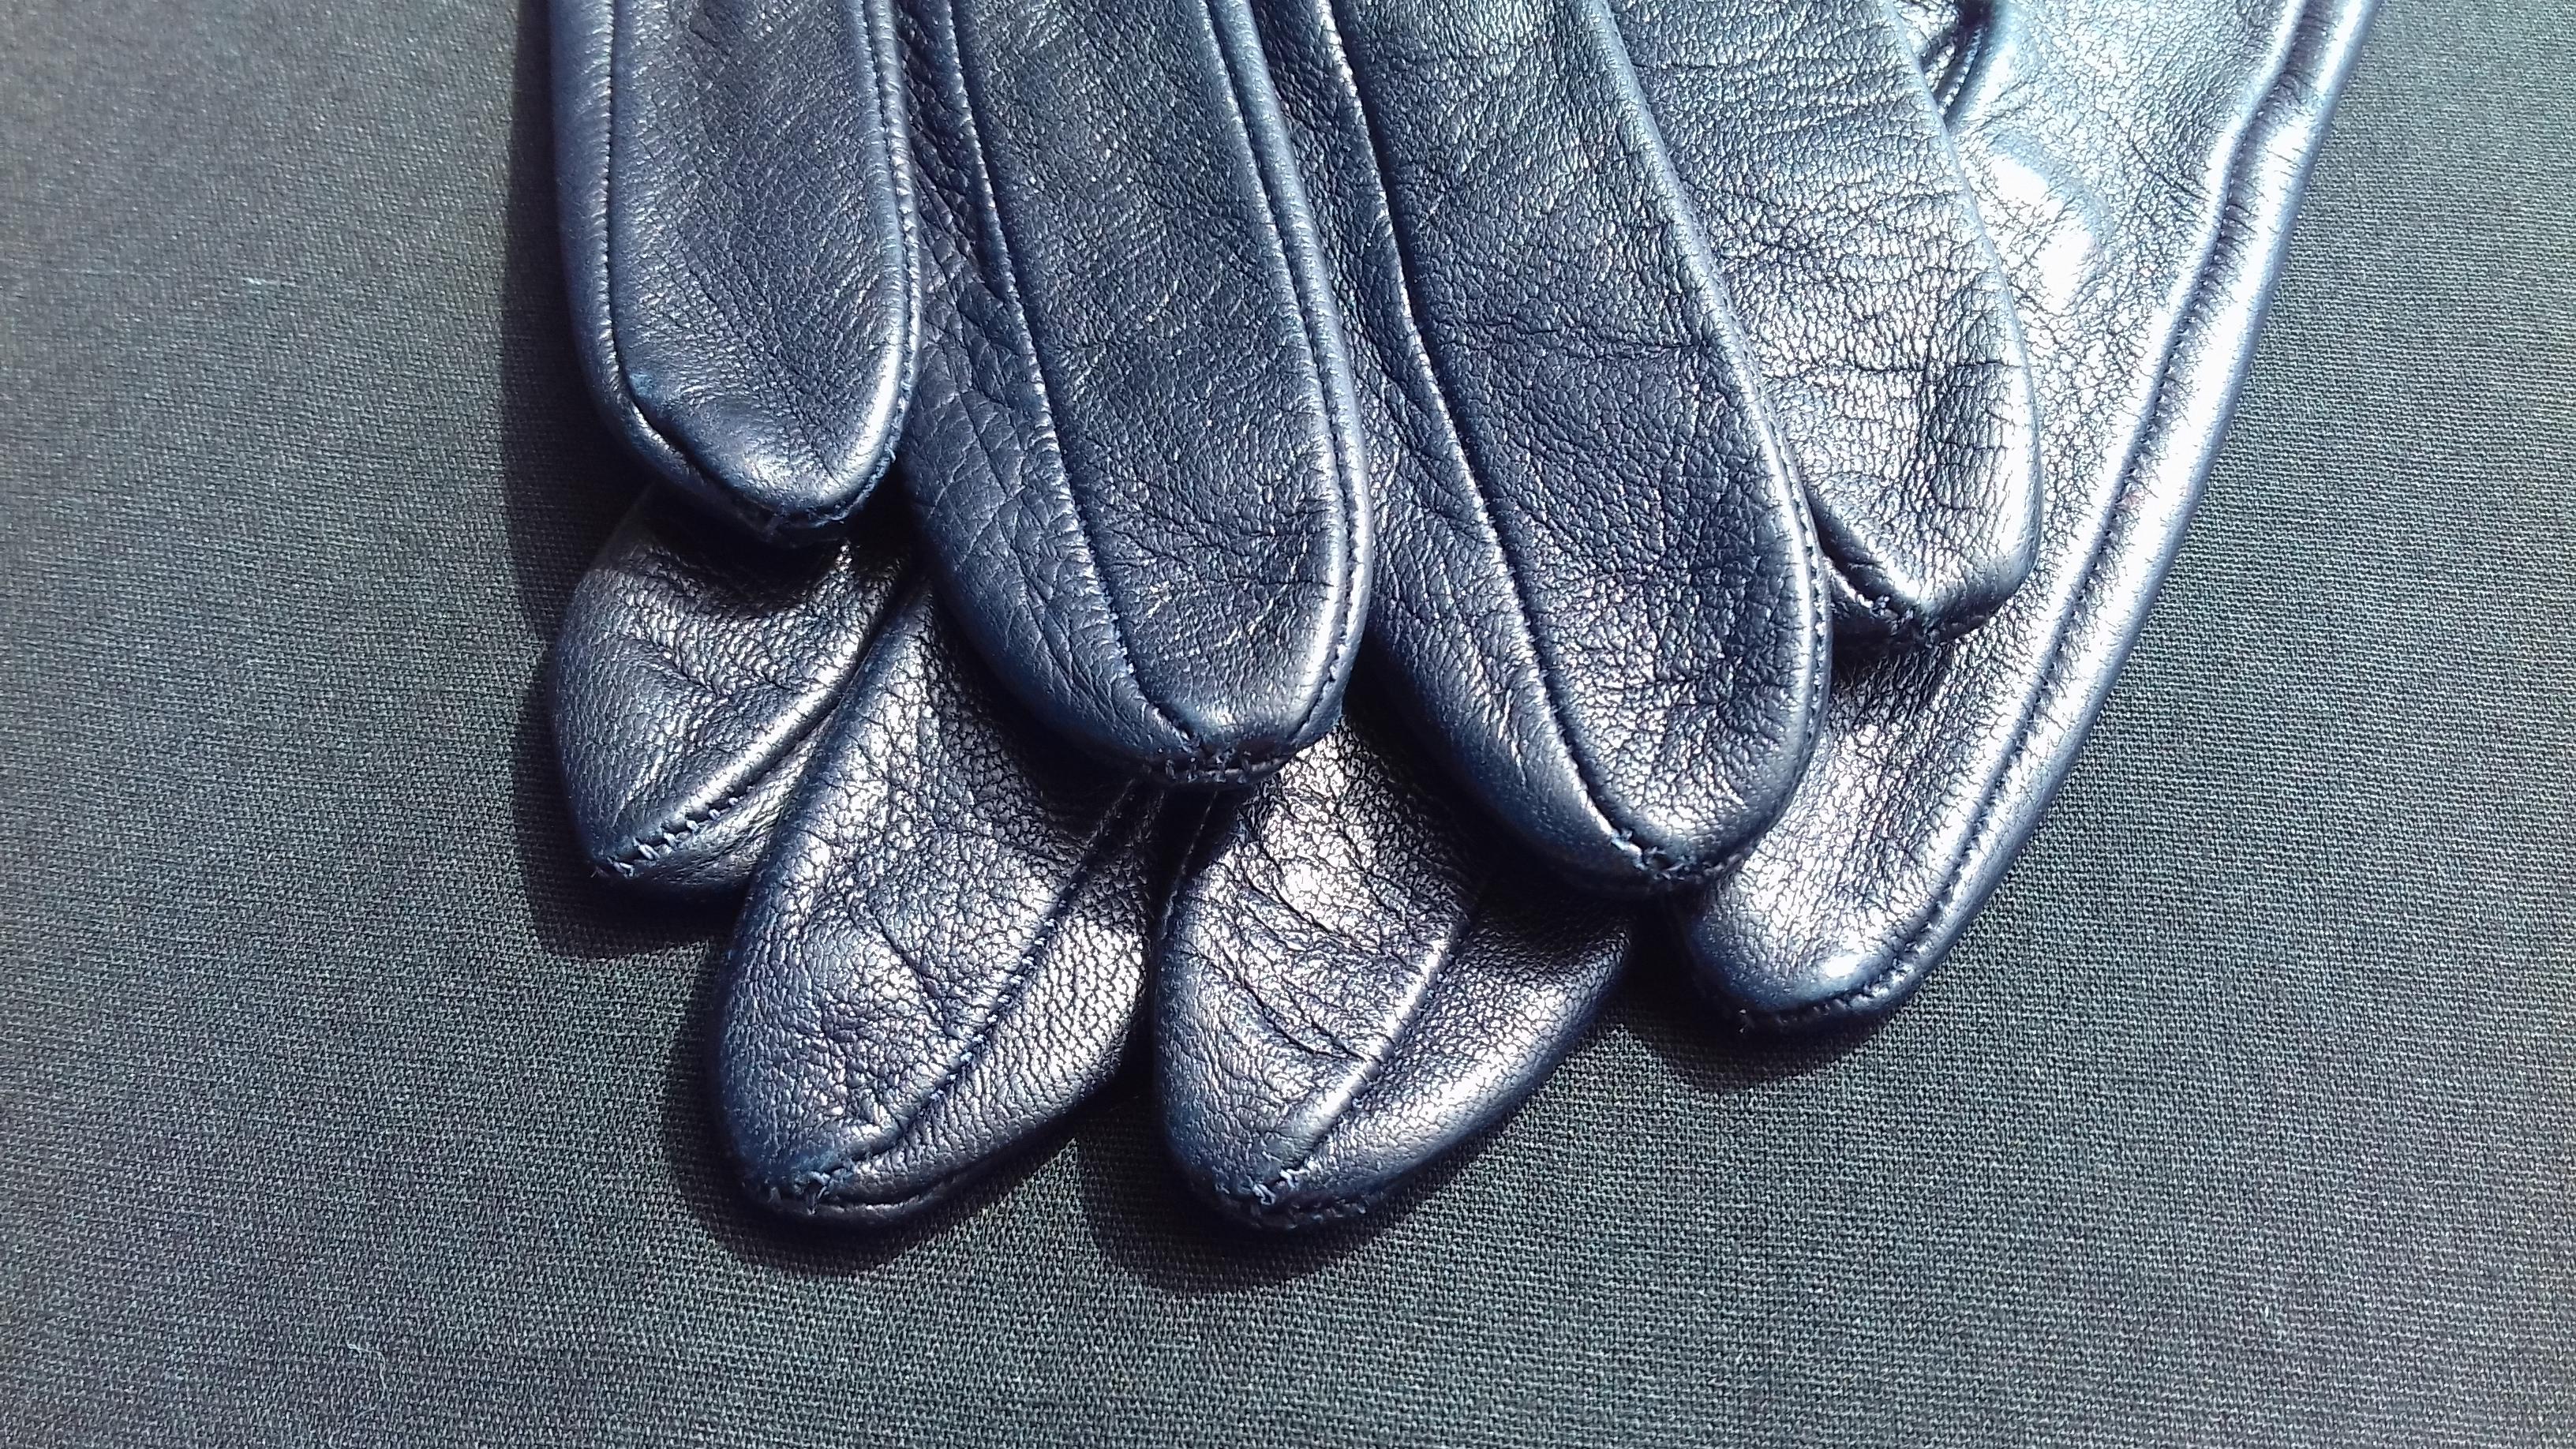 Hermès Gloves Dark Blue and White Leather Gloves Ghillies Size 6/7 10